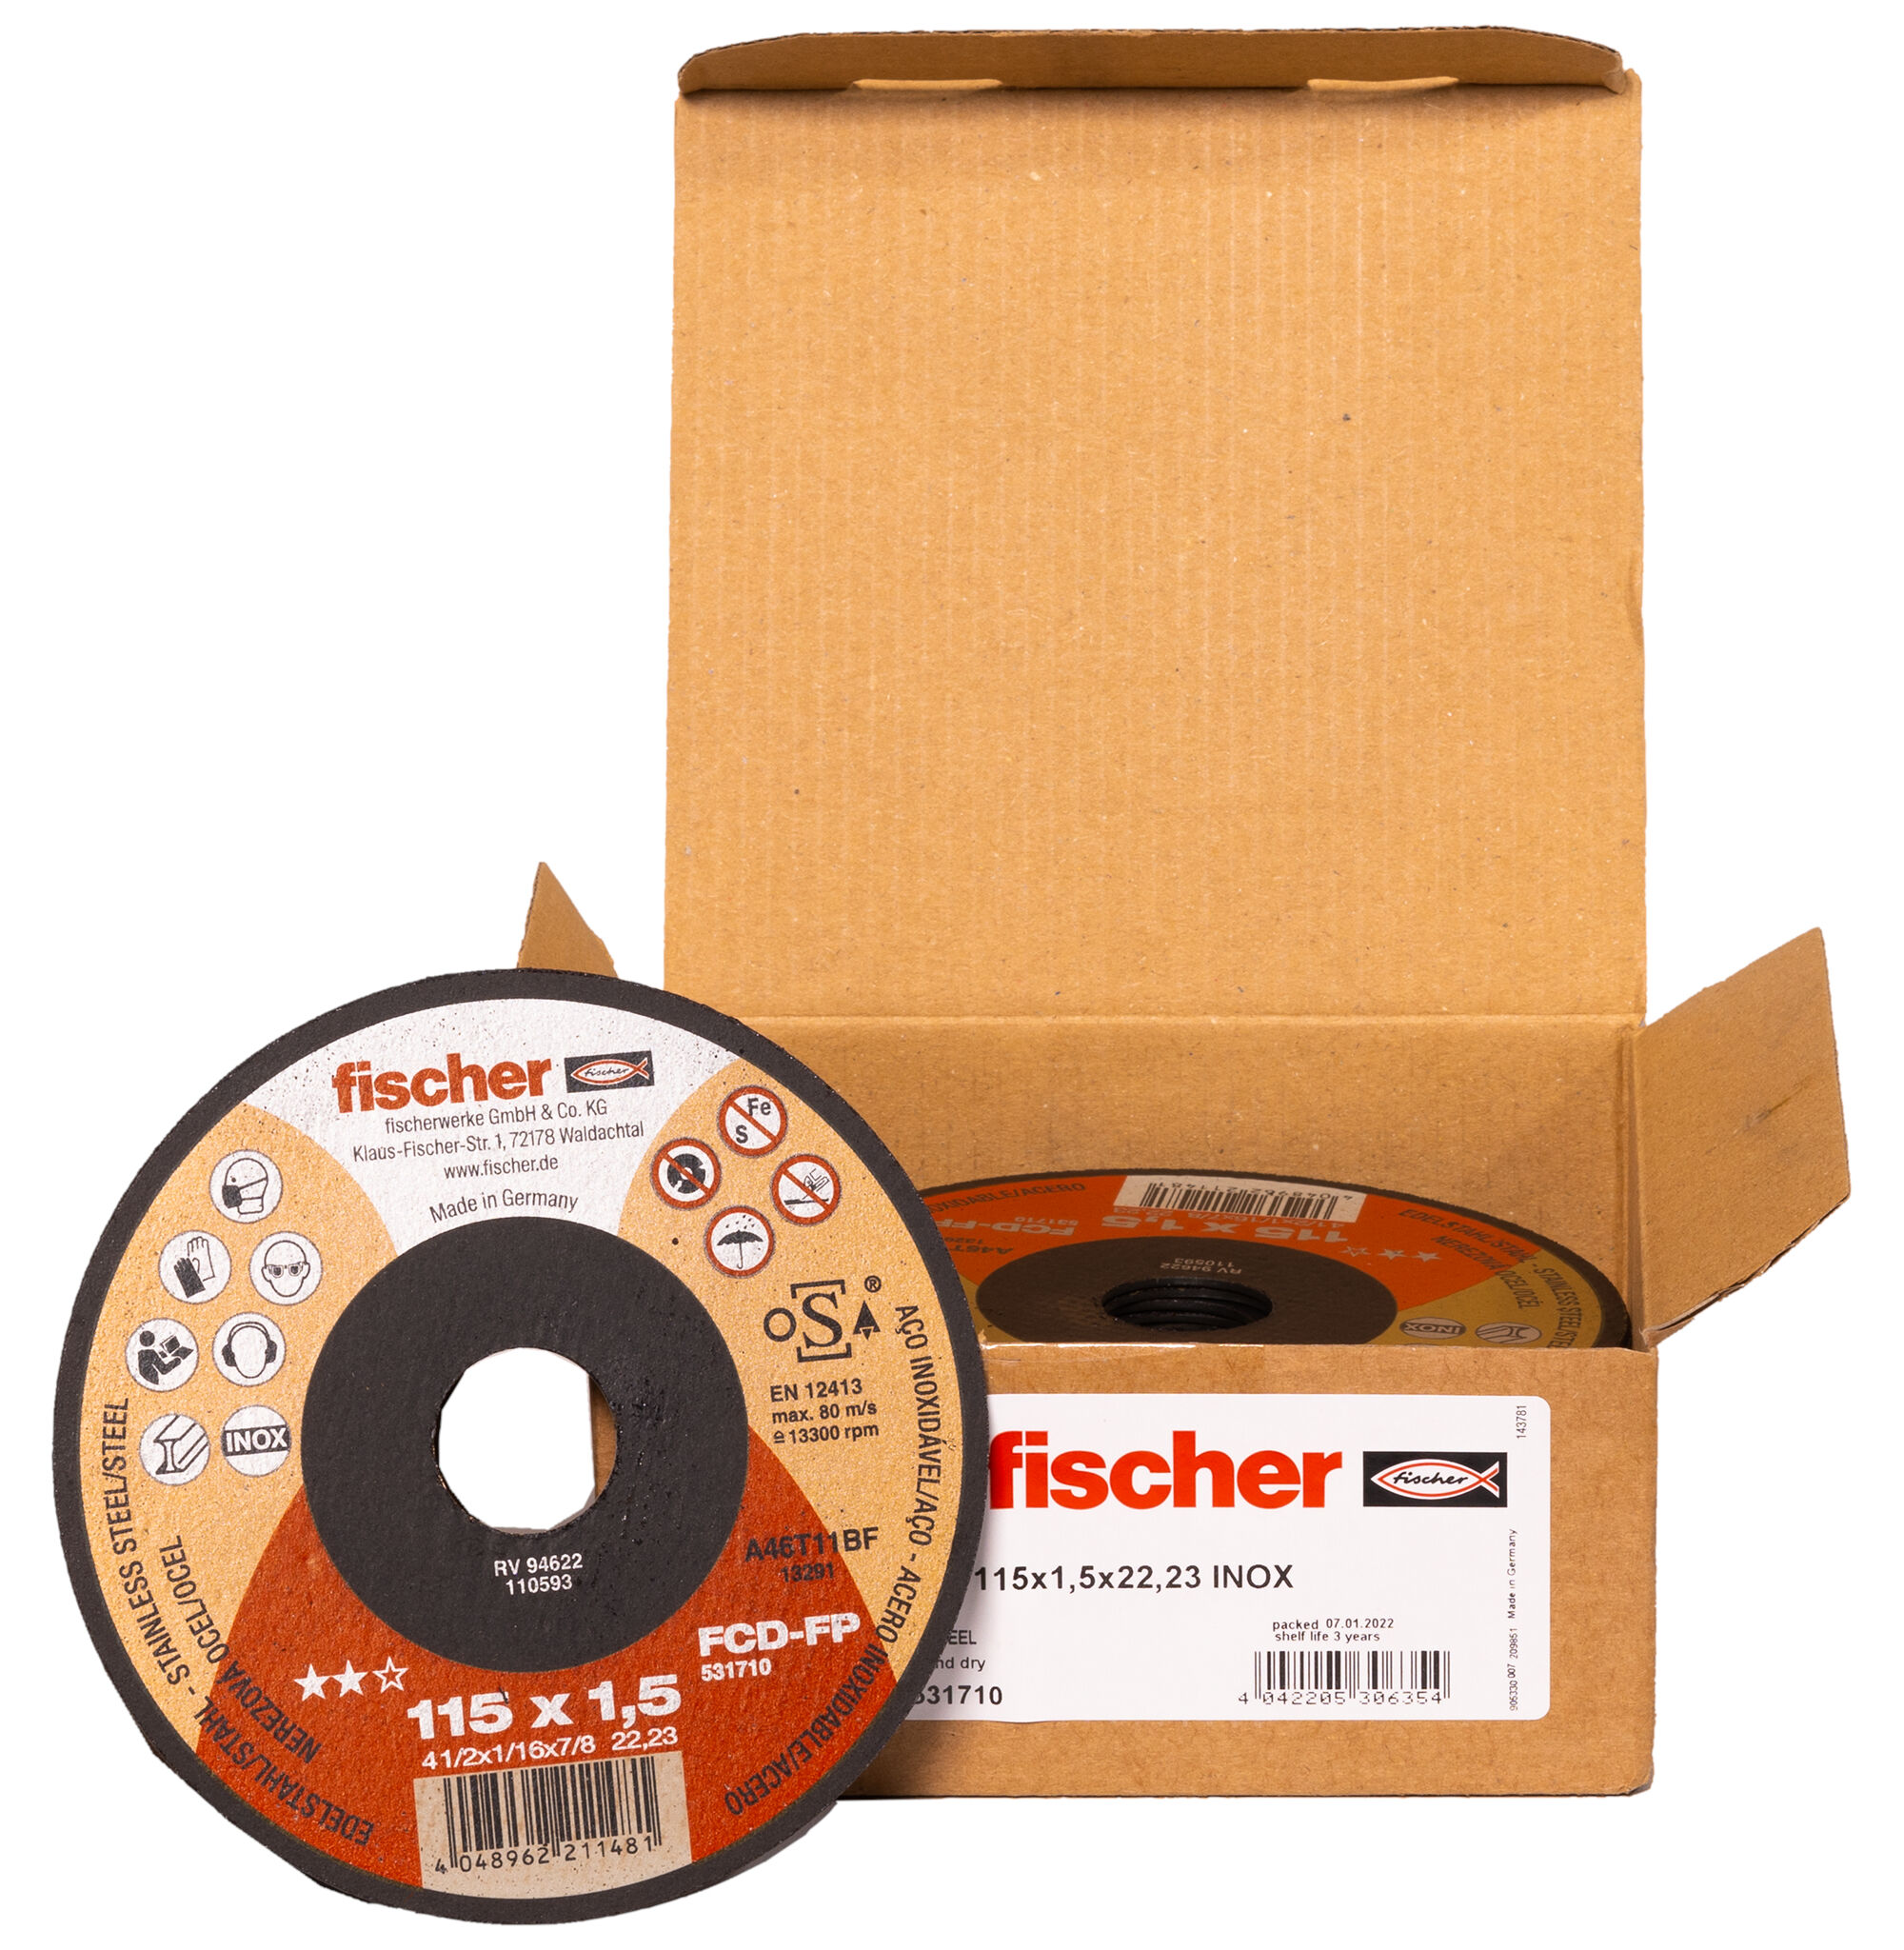 fischer cutting disc FCD-FP 115 x 1,5 x 22,23 plus